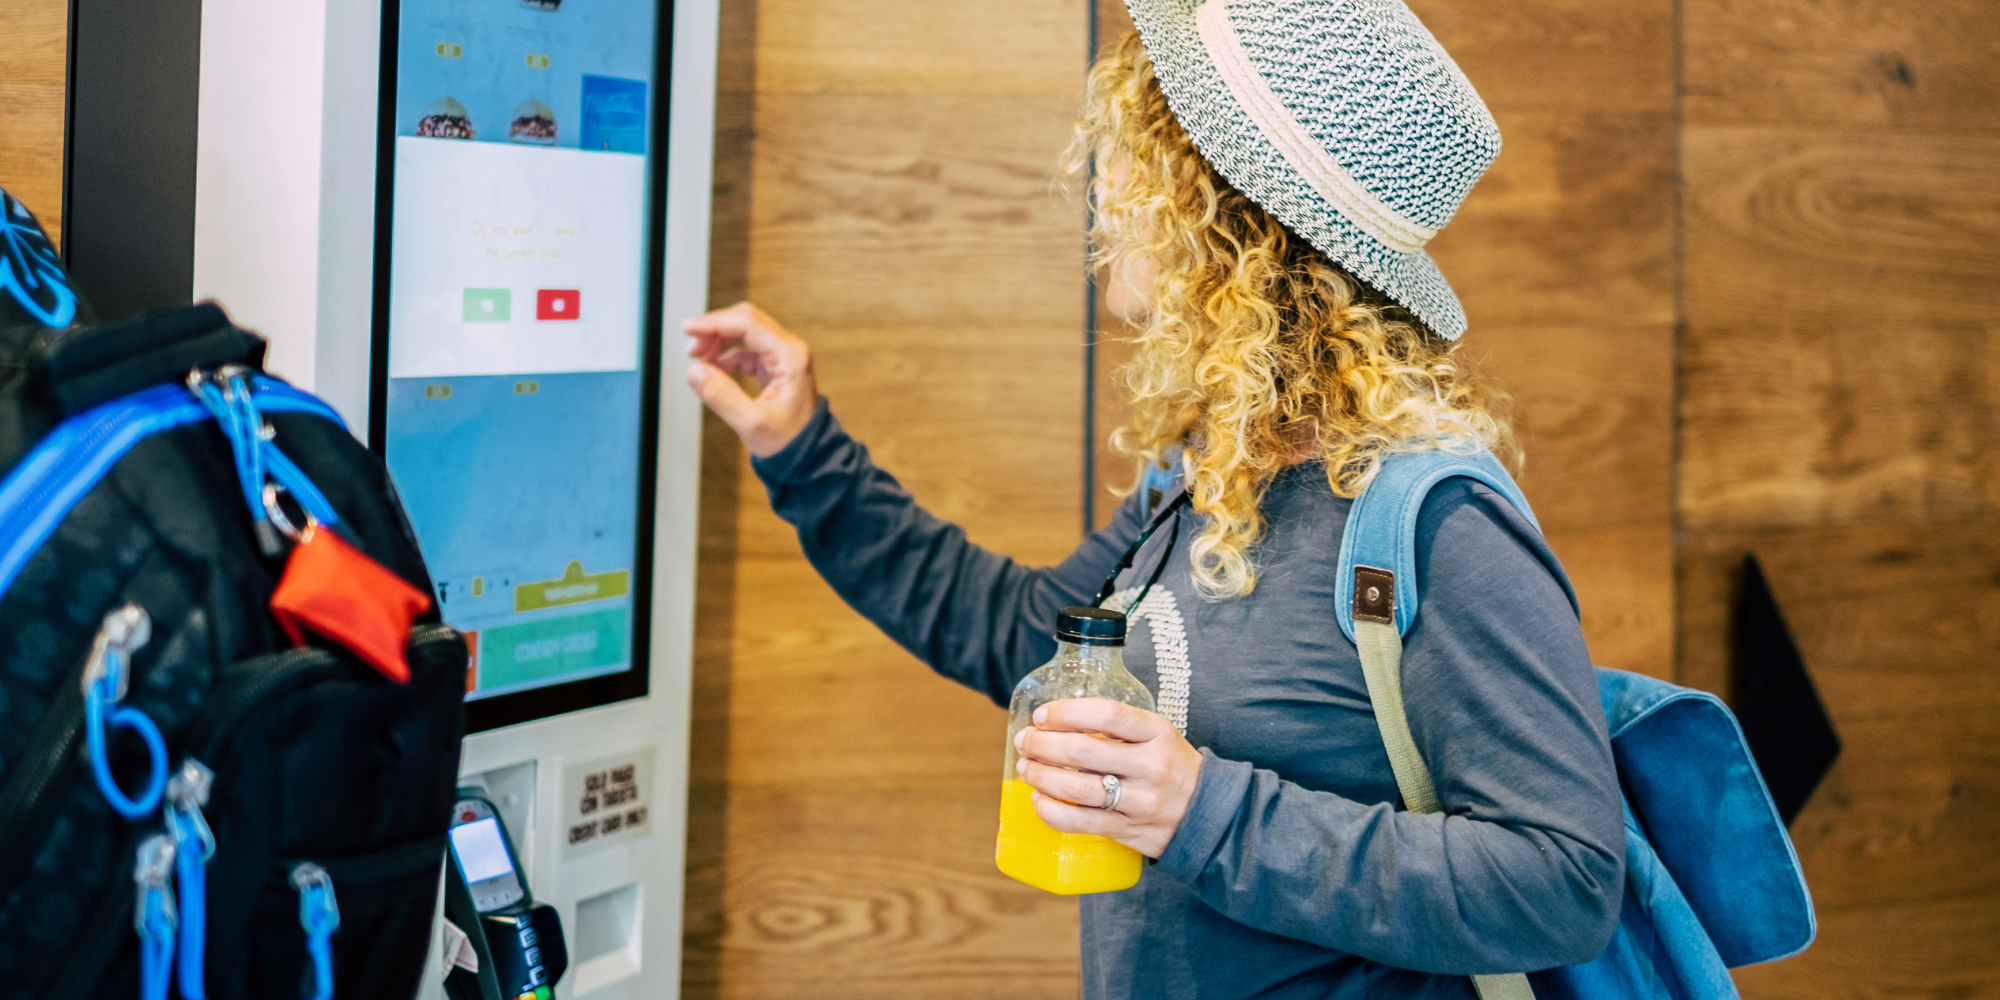 woman ordering food using a digital signage kiosk display